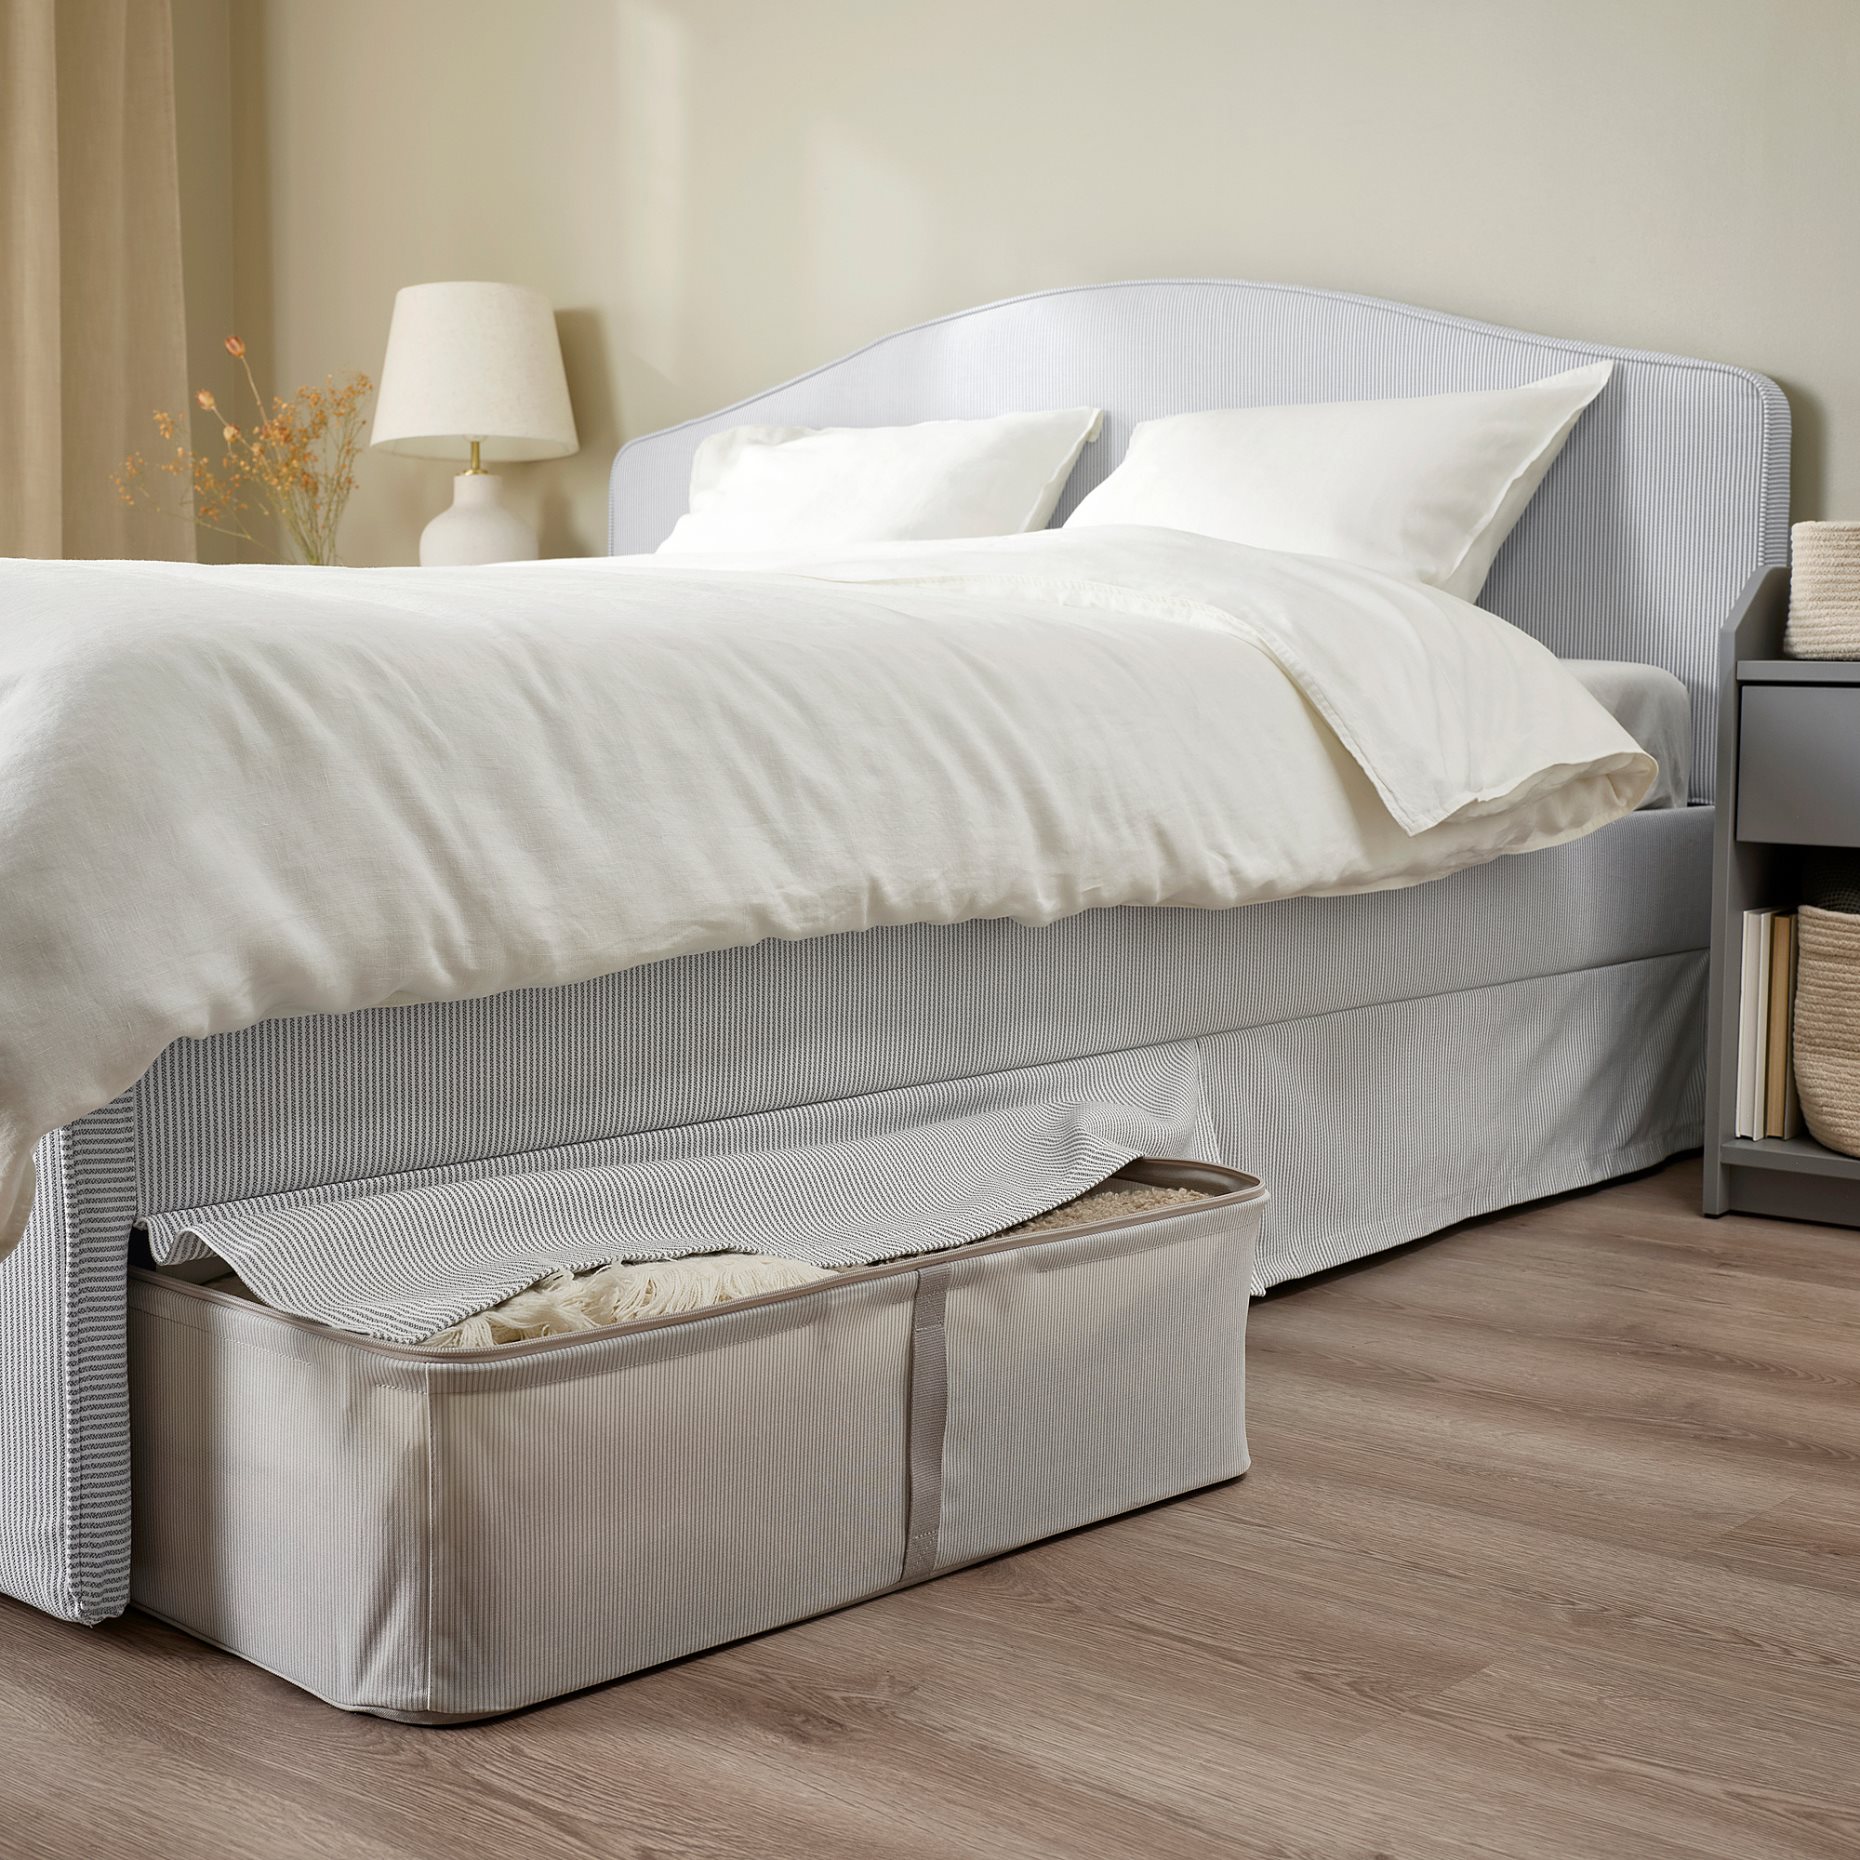 RAMNEFJALL, κρεβάτι με επένδυση, 140x200 cm, 295.602.27